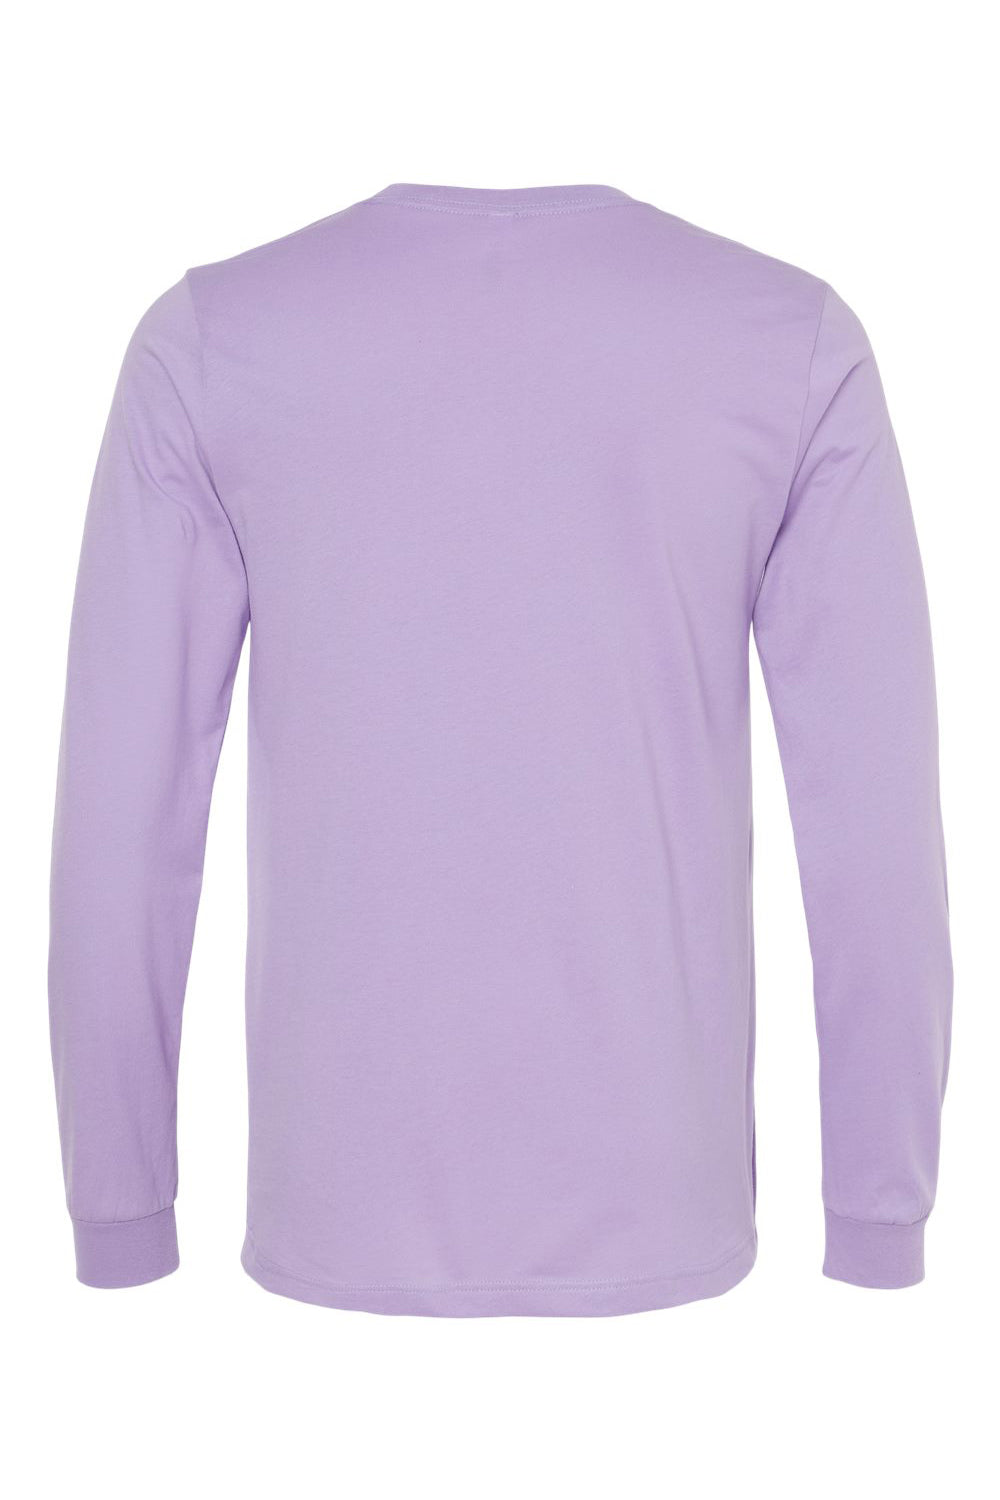 Bella + Canvas BC3501/3501 Mens Jersey Long Sleeve Crewneck T-Shirt Dark Lavender Purple Flat Back